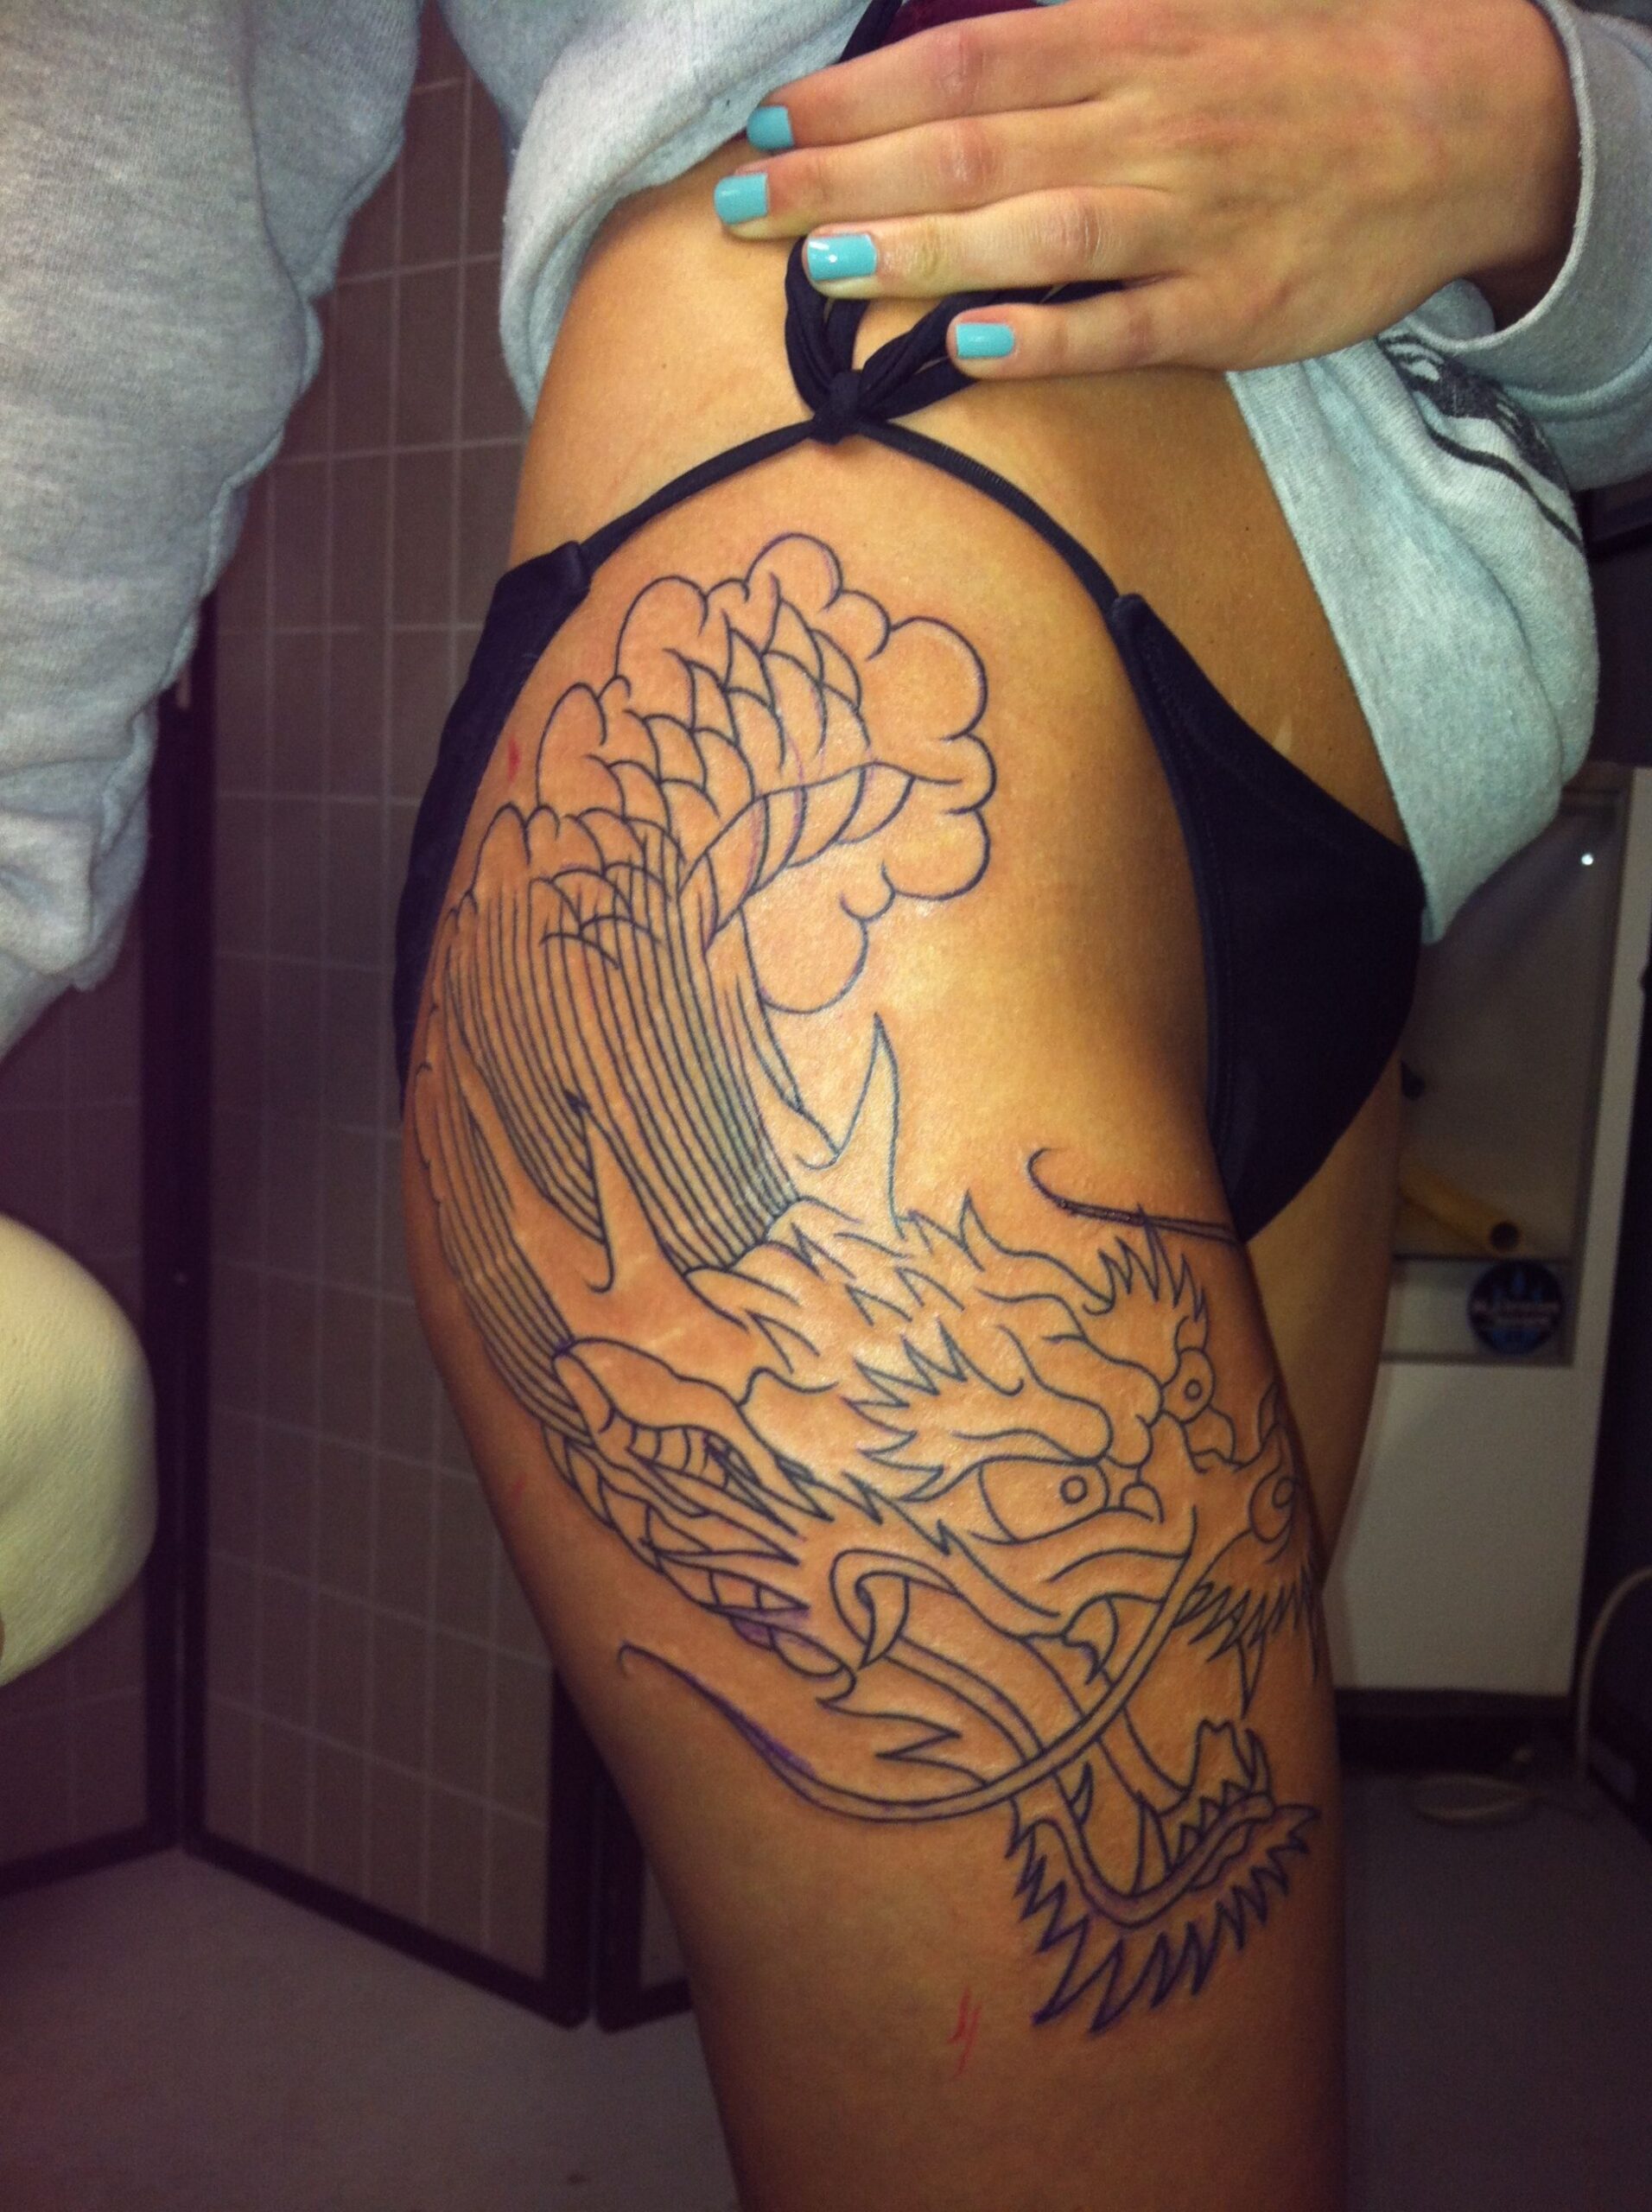 Dragon Thigh Tattoo Modern Image Ideas For Women And Men Body Tattoo Art